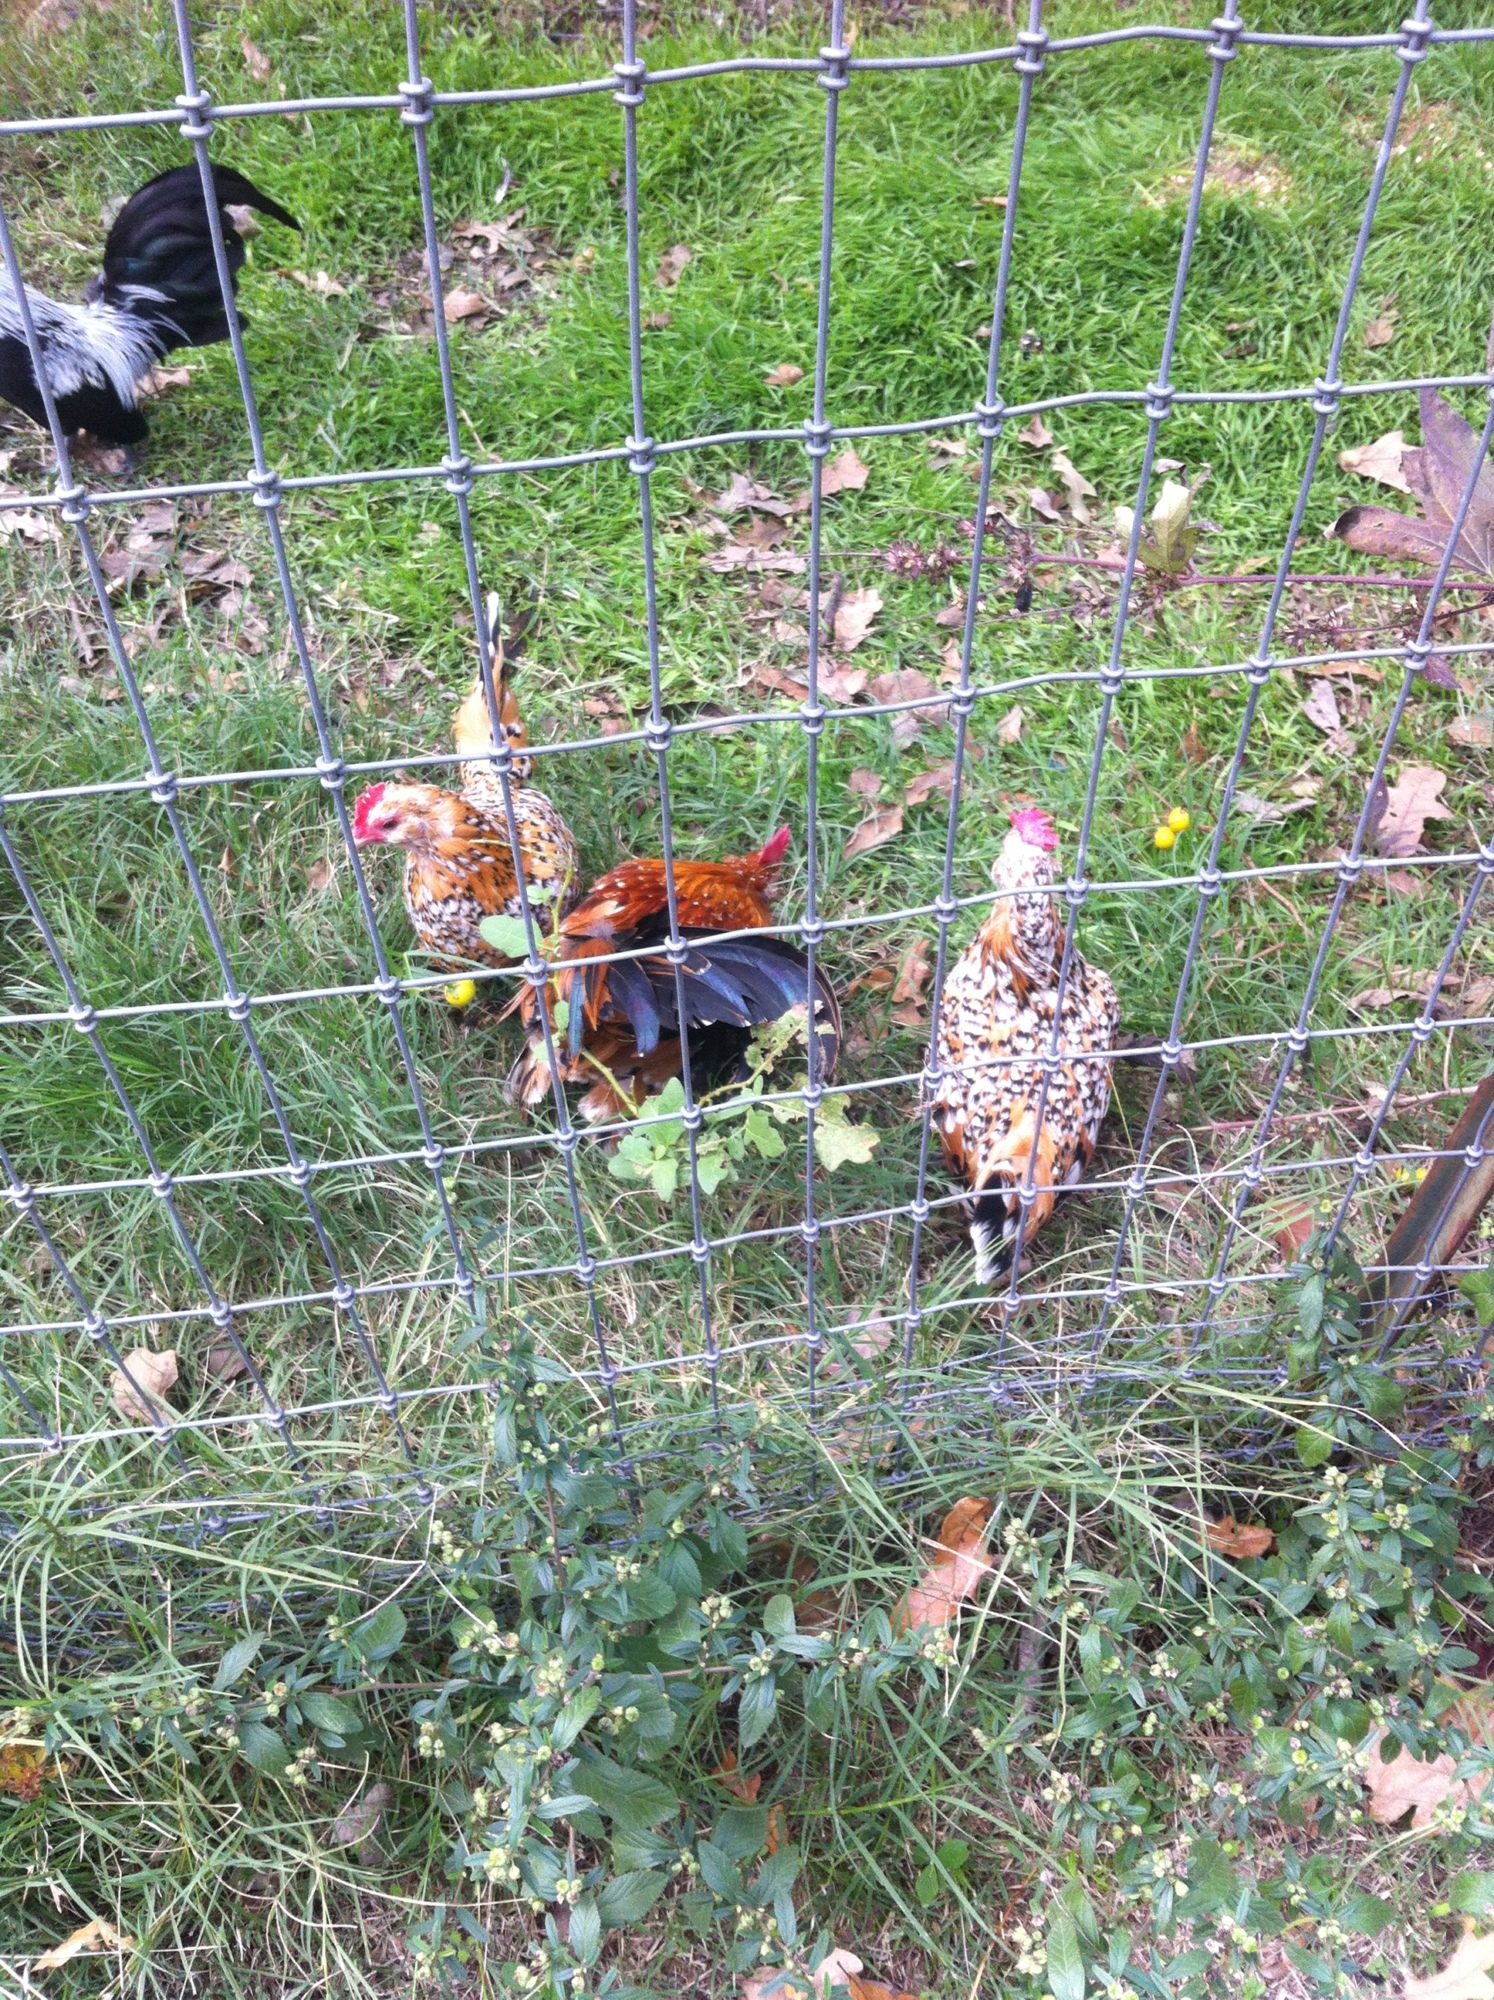 New chickens!!!